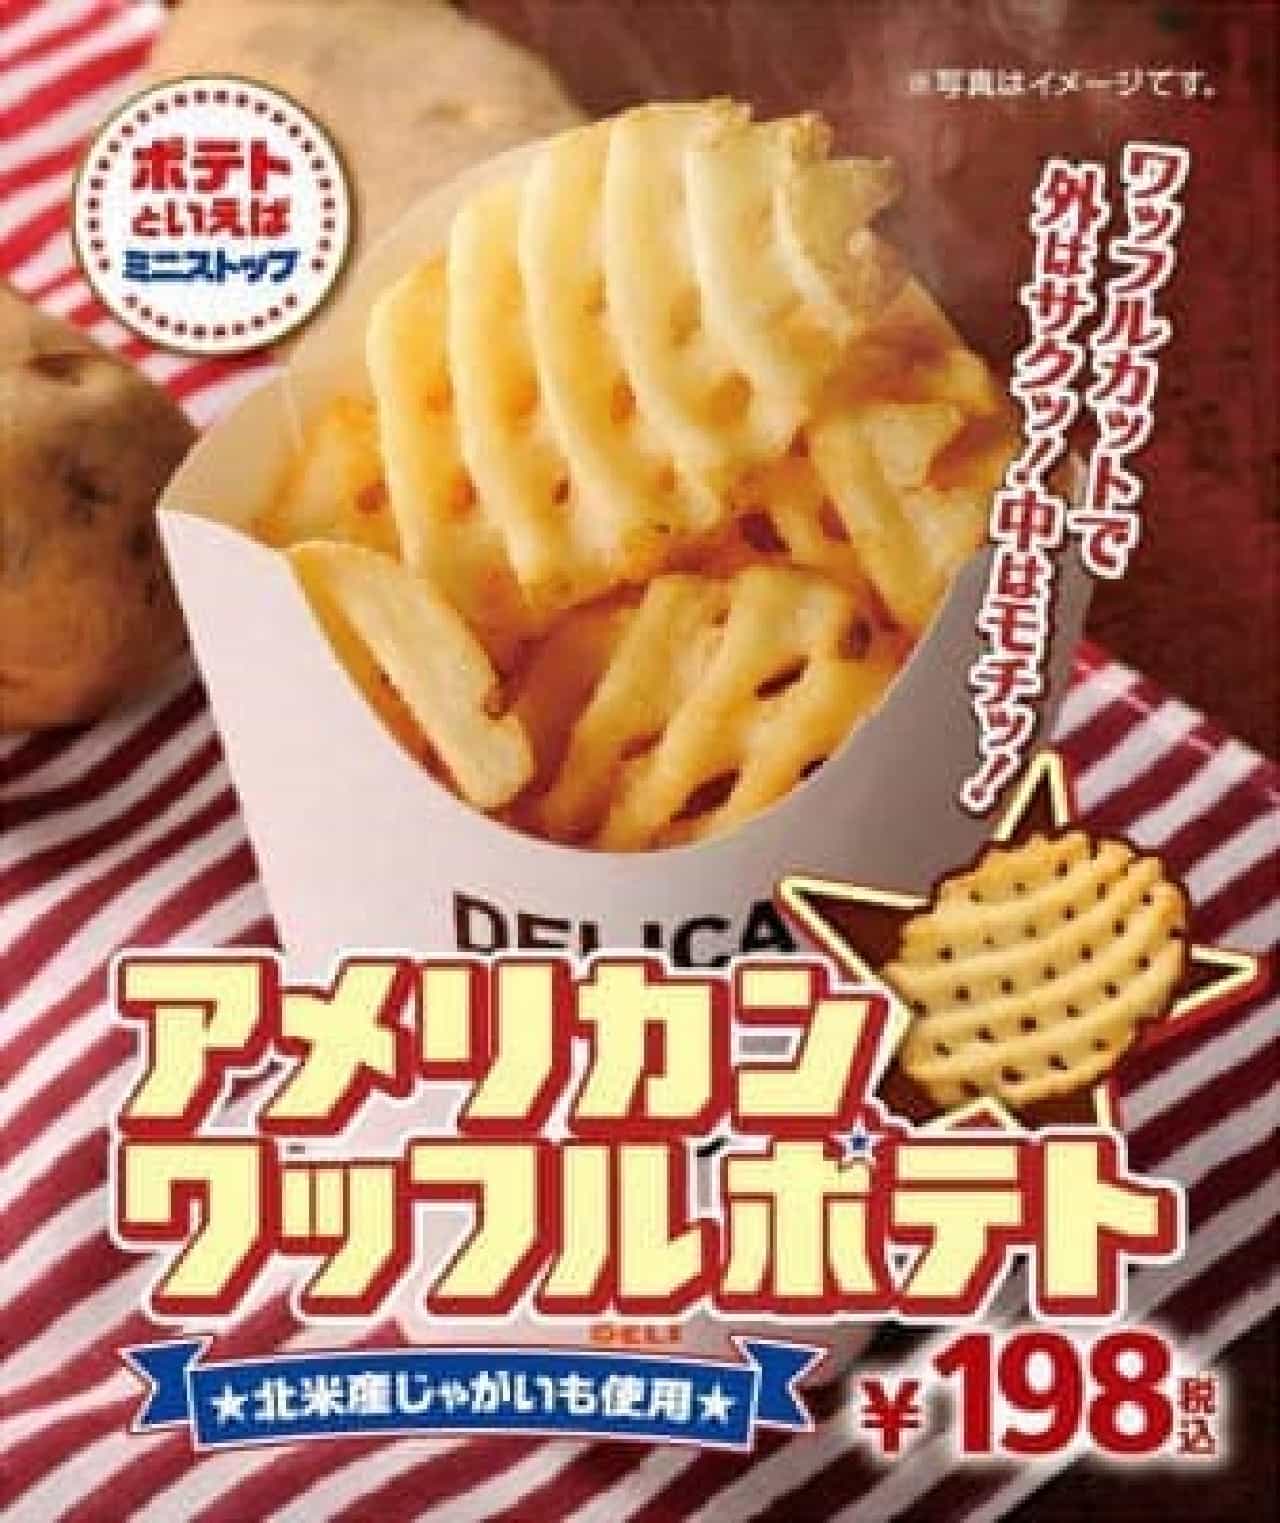 American waffle potatoes